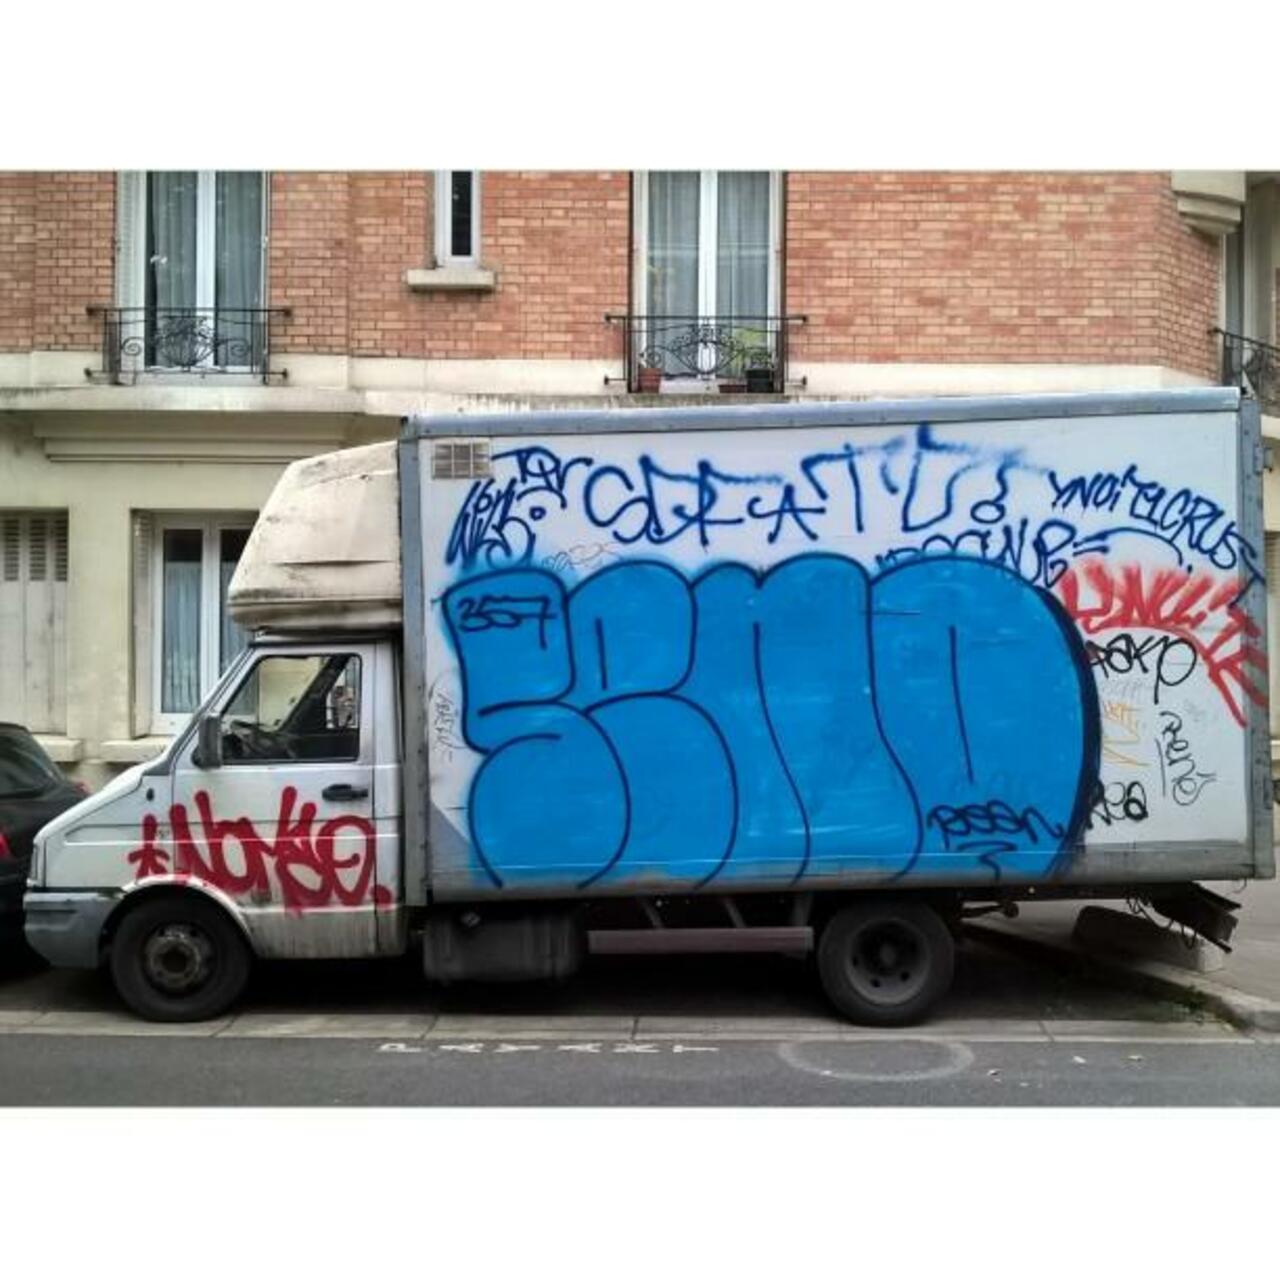 #Paris #graffiti photo by @maxdimontemarciano http://ift.tt/1k7DfZo #StreetArt http://t.co/R4e6E5kWFP